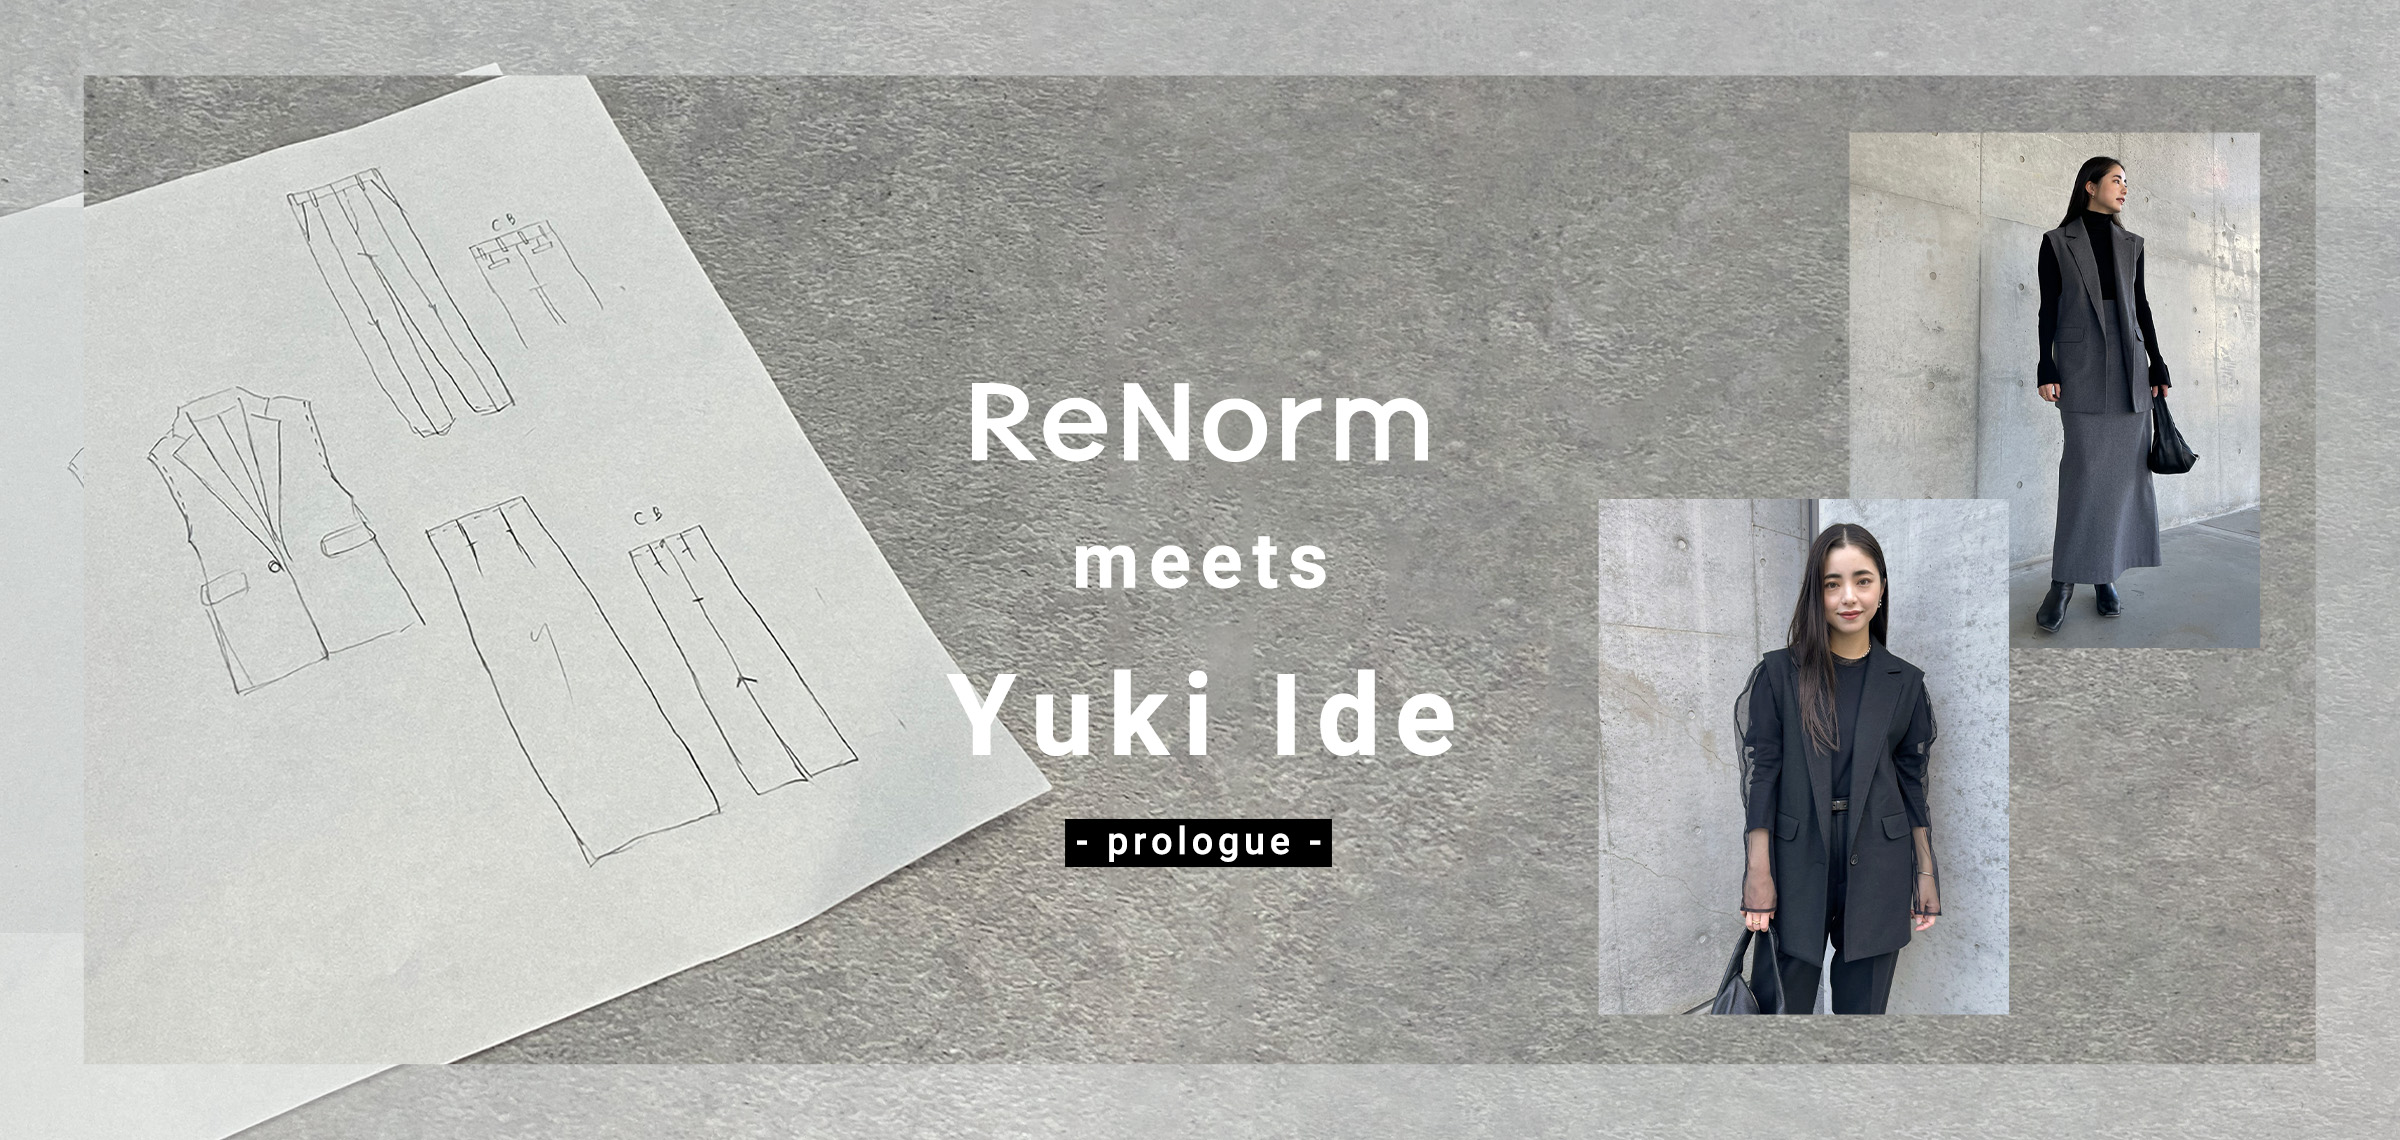 ReNorm meets Yuki Ide -prologue-